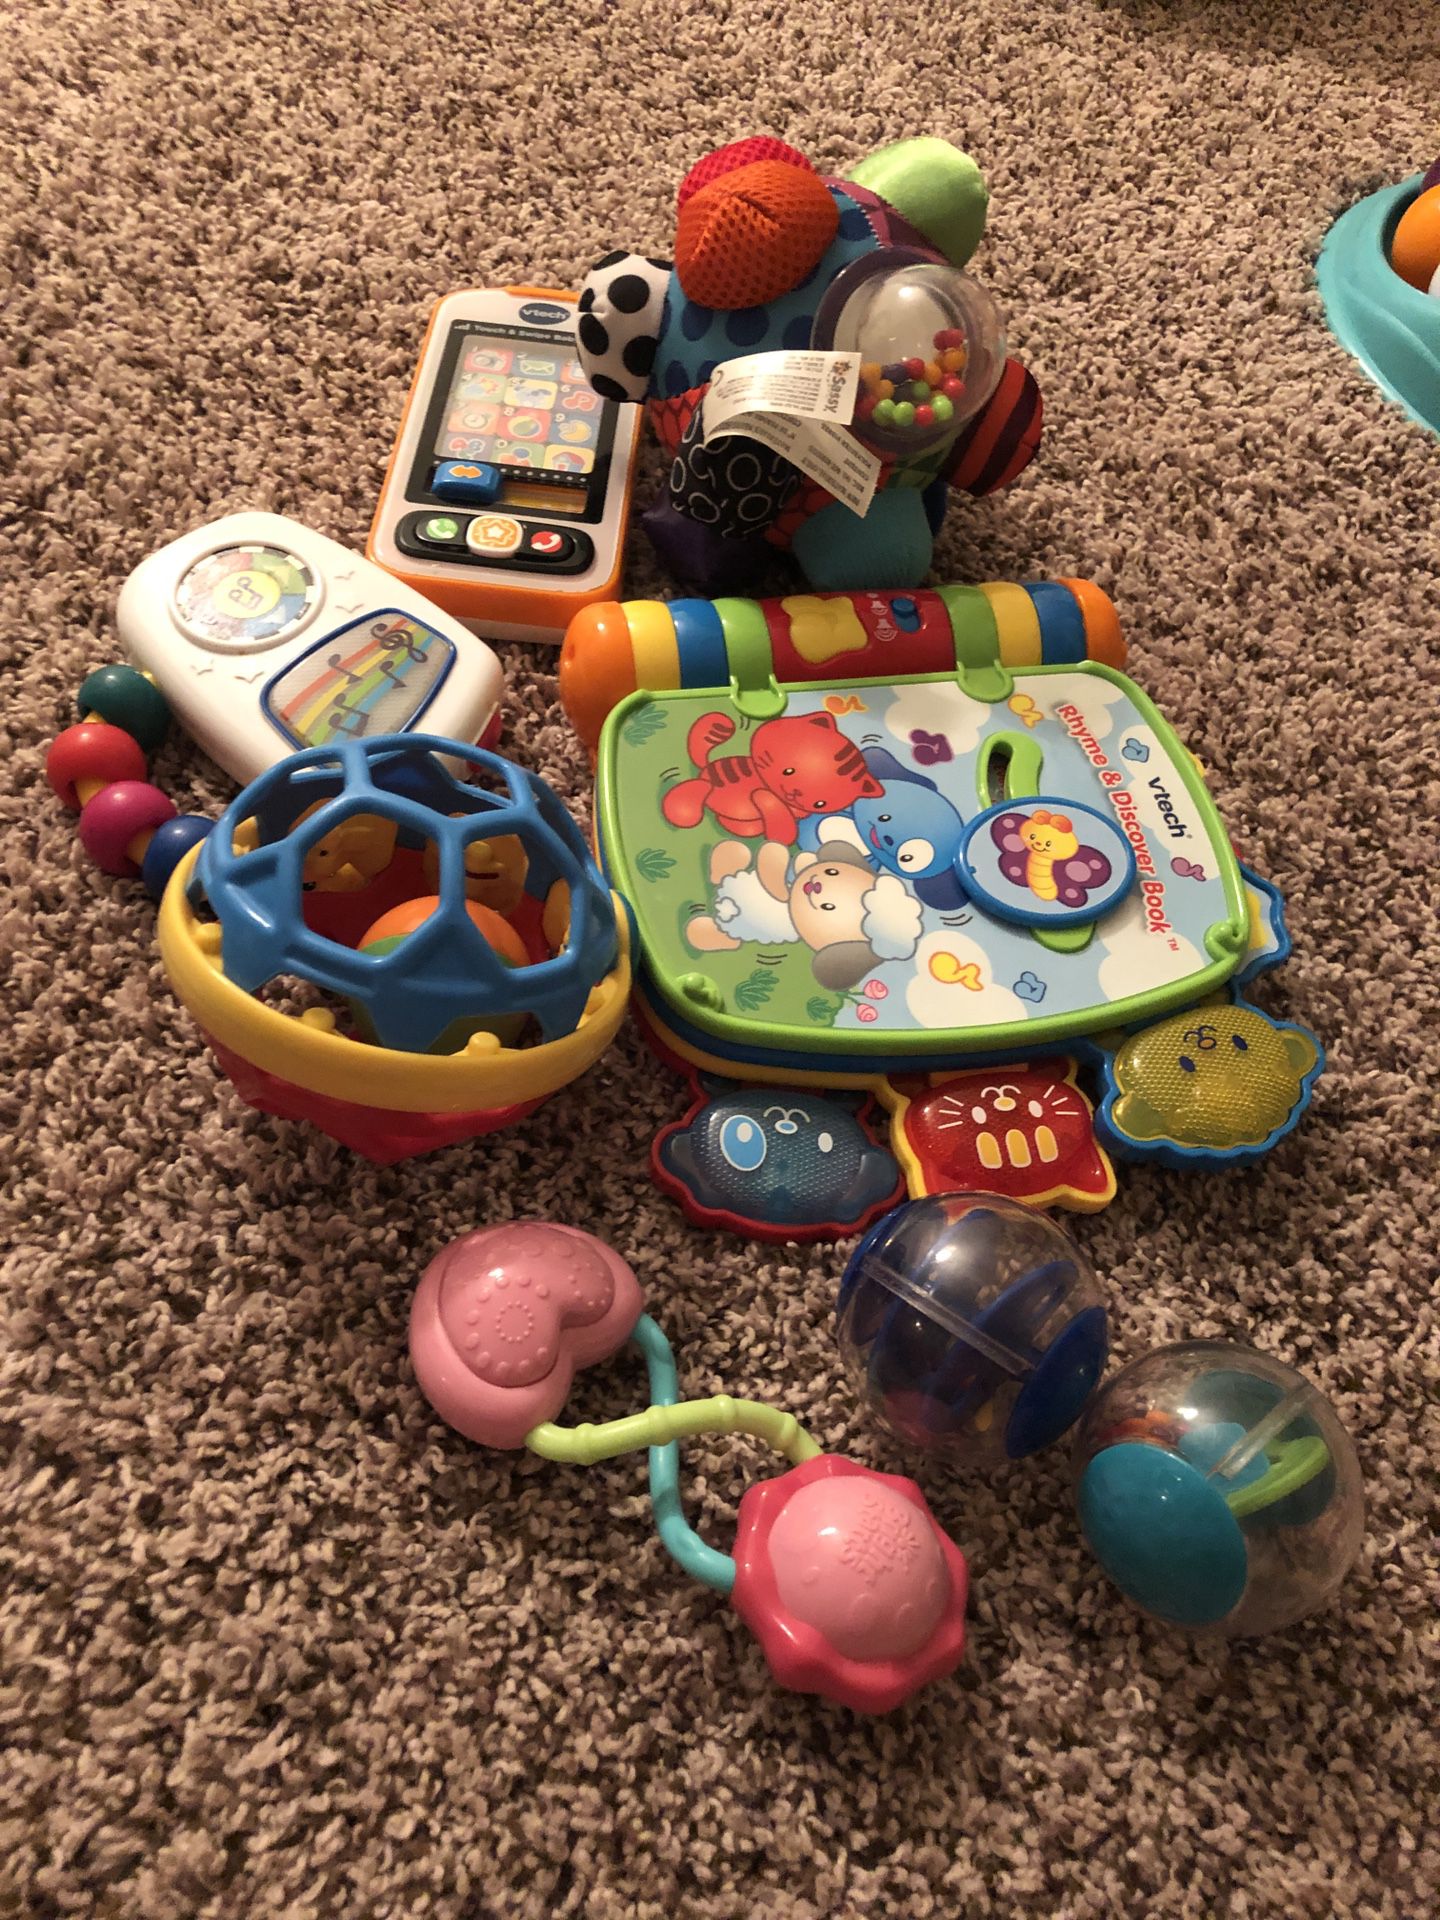 Baby toys $1